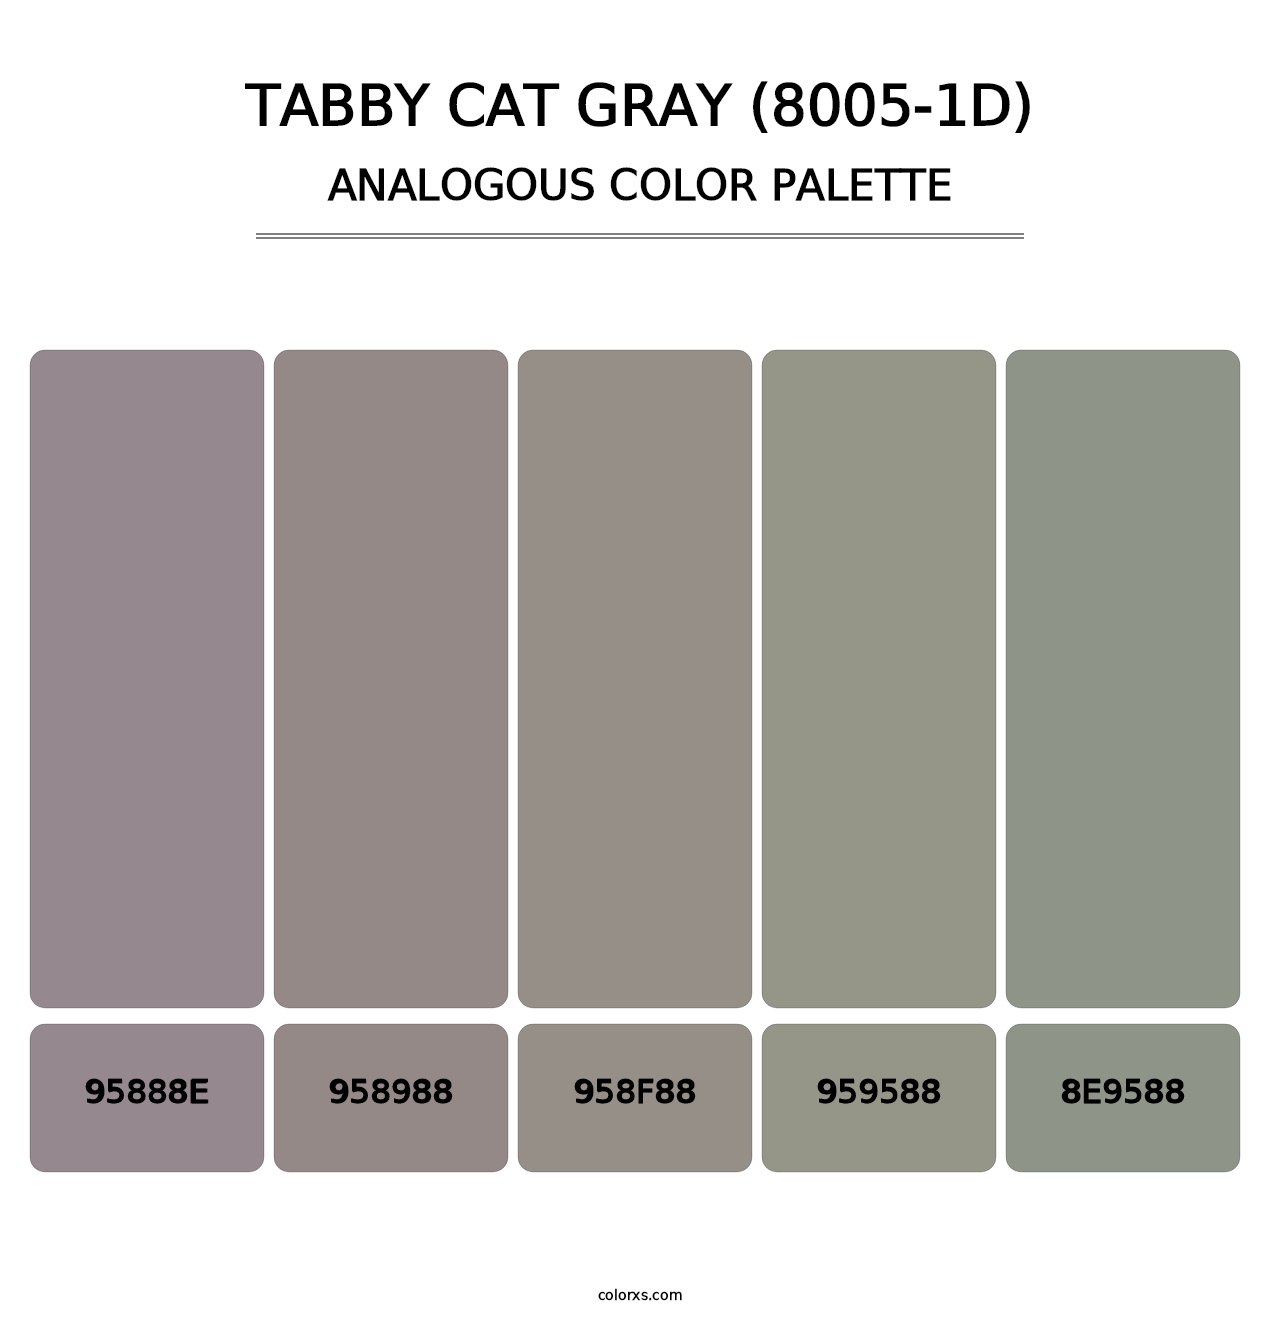 Tabby Cat Gray (8005-1D) - Analogous Color Palette